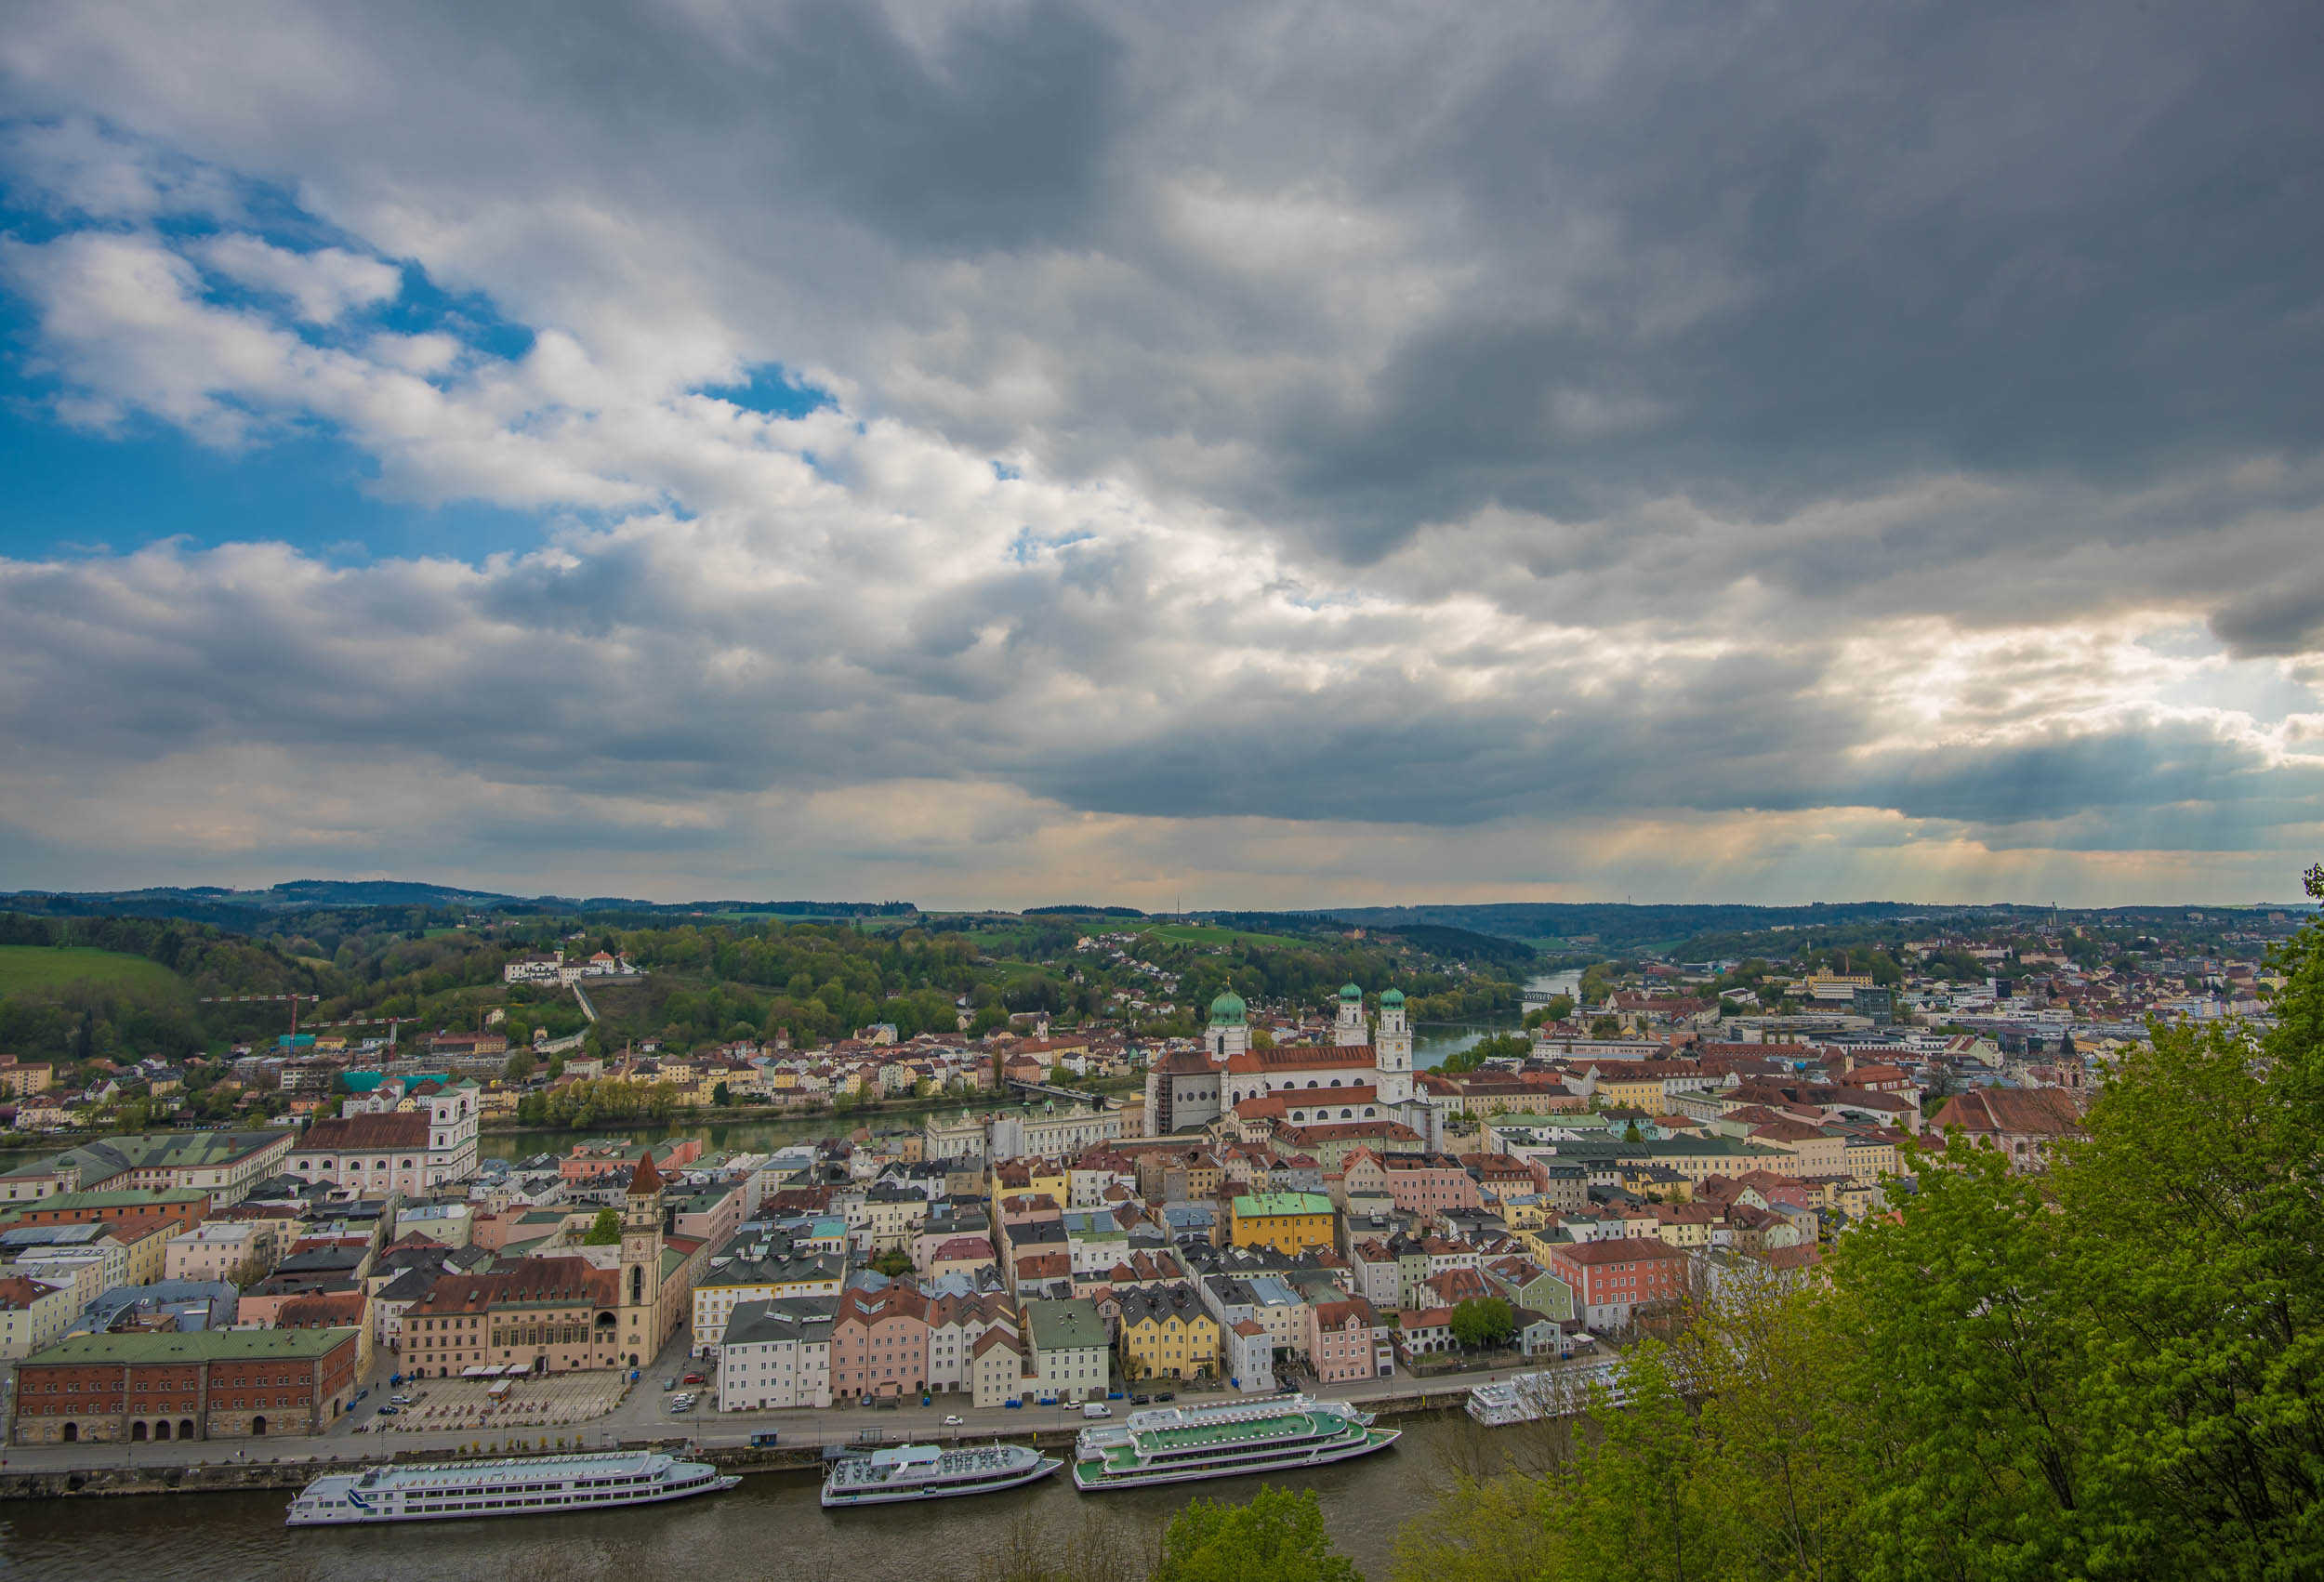  Passau, Germany 